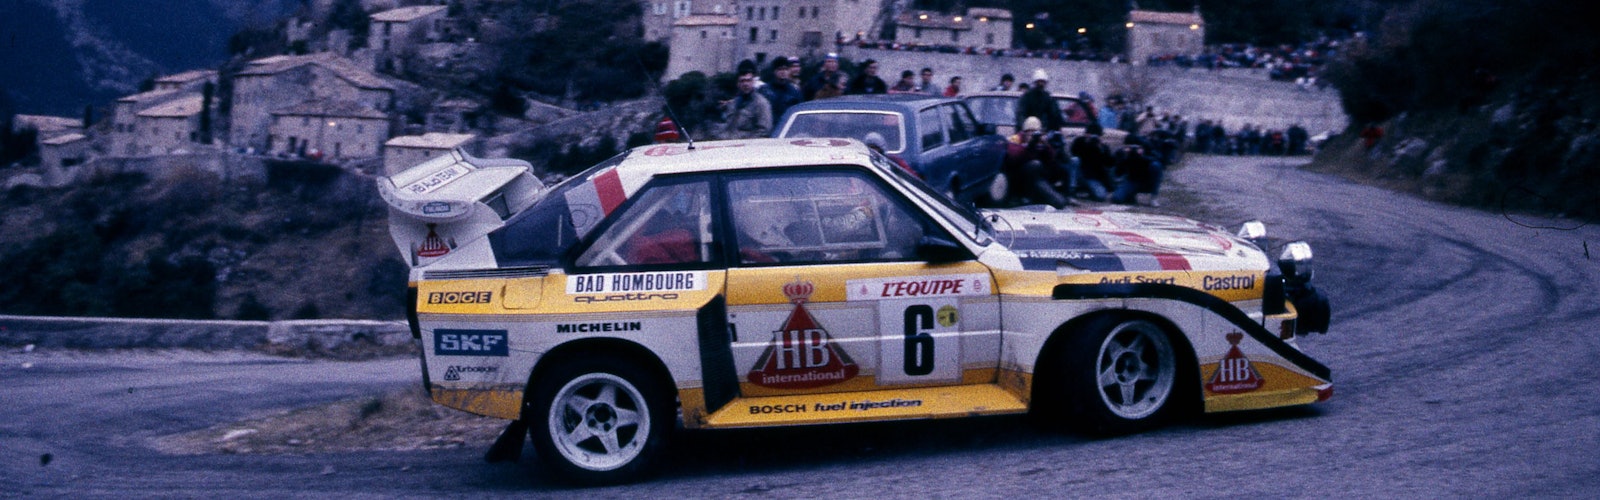 Rally MonteCarlo 1986, Monaco 18-24 01 1986